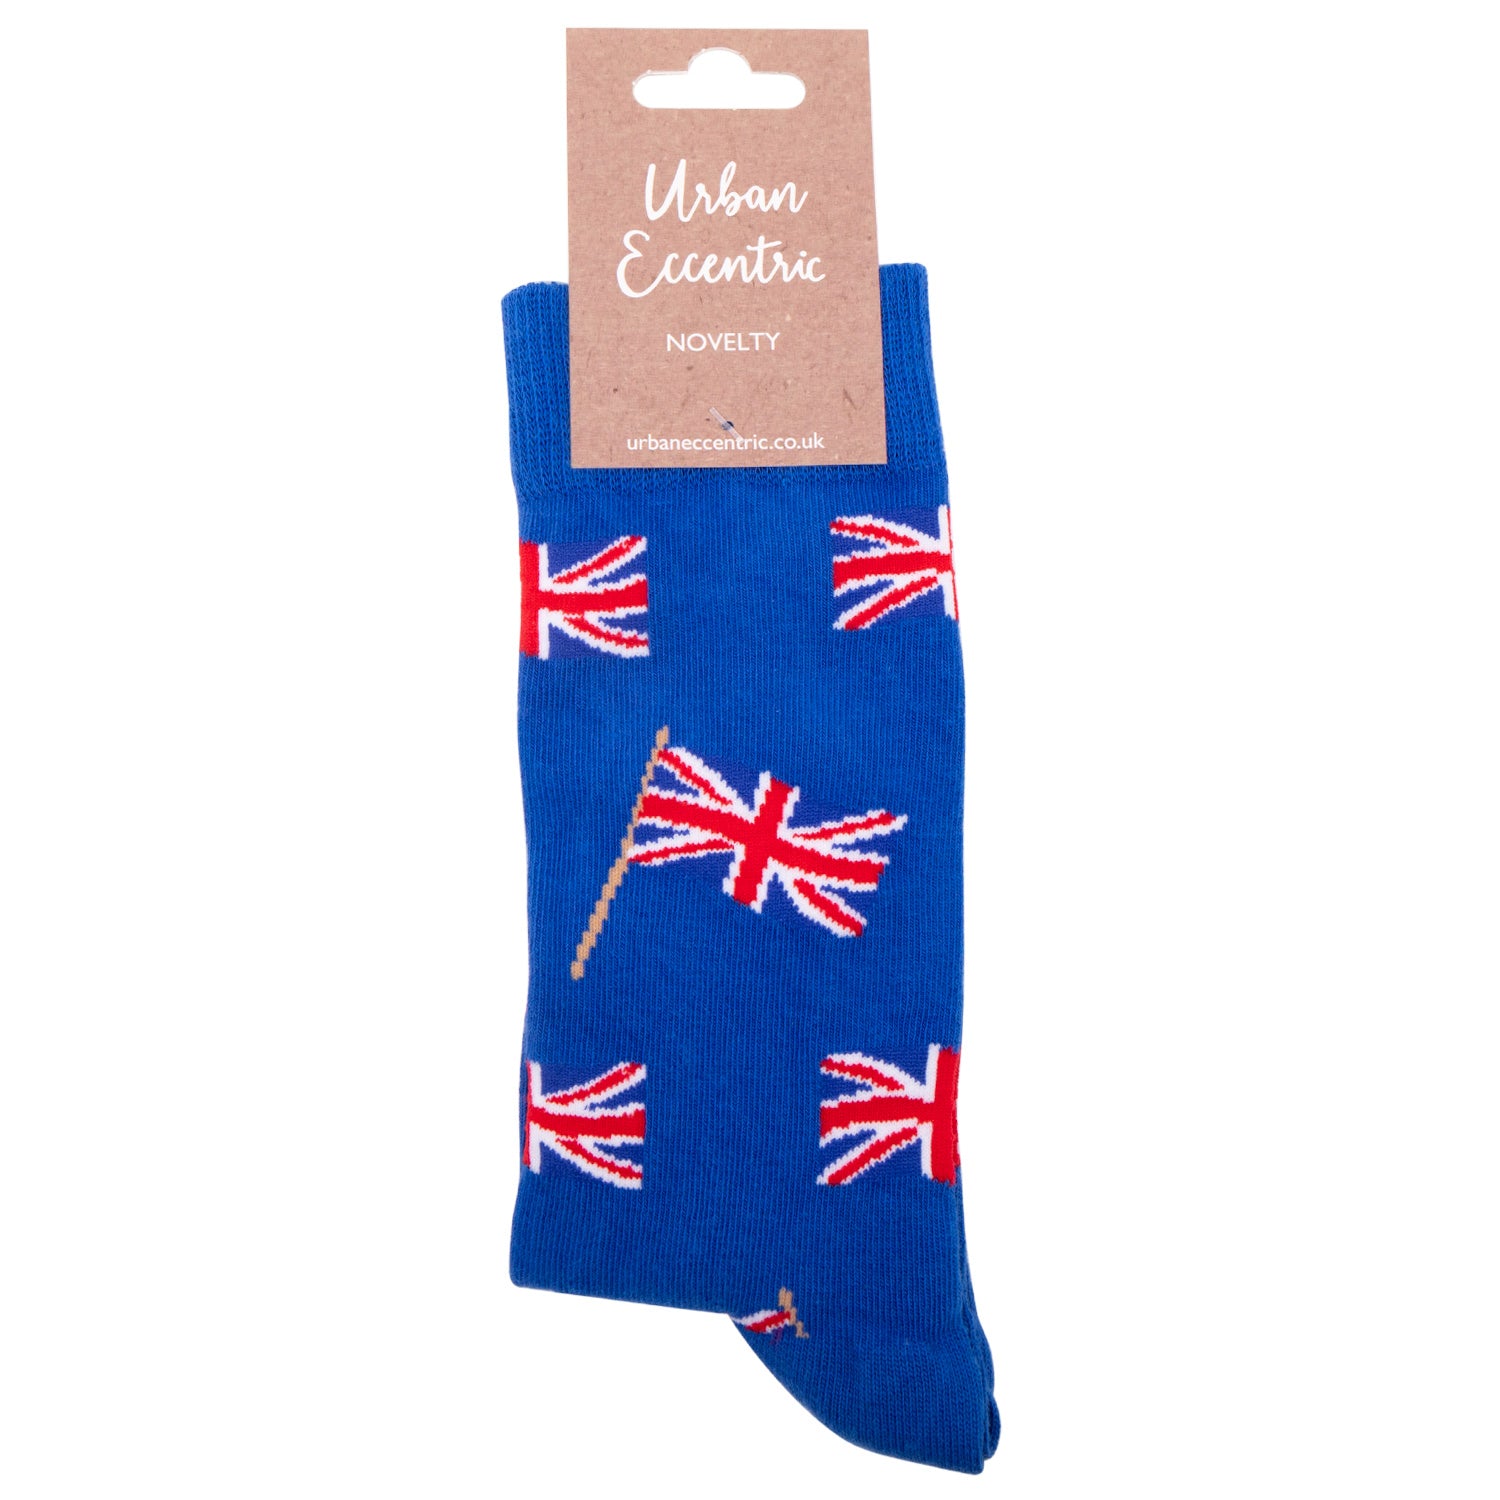 Urban Eccentric Union Jack Socks - Single Pair